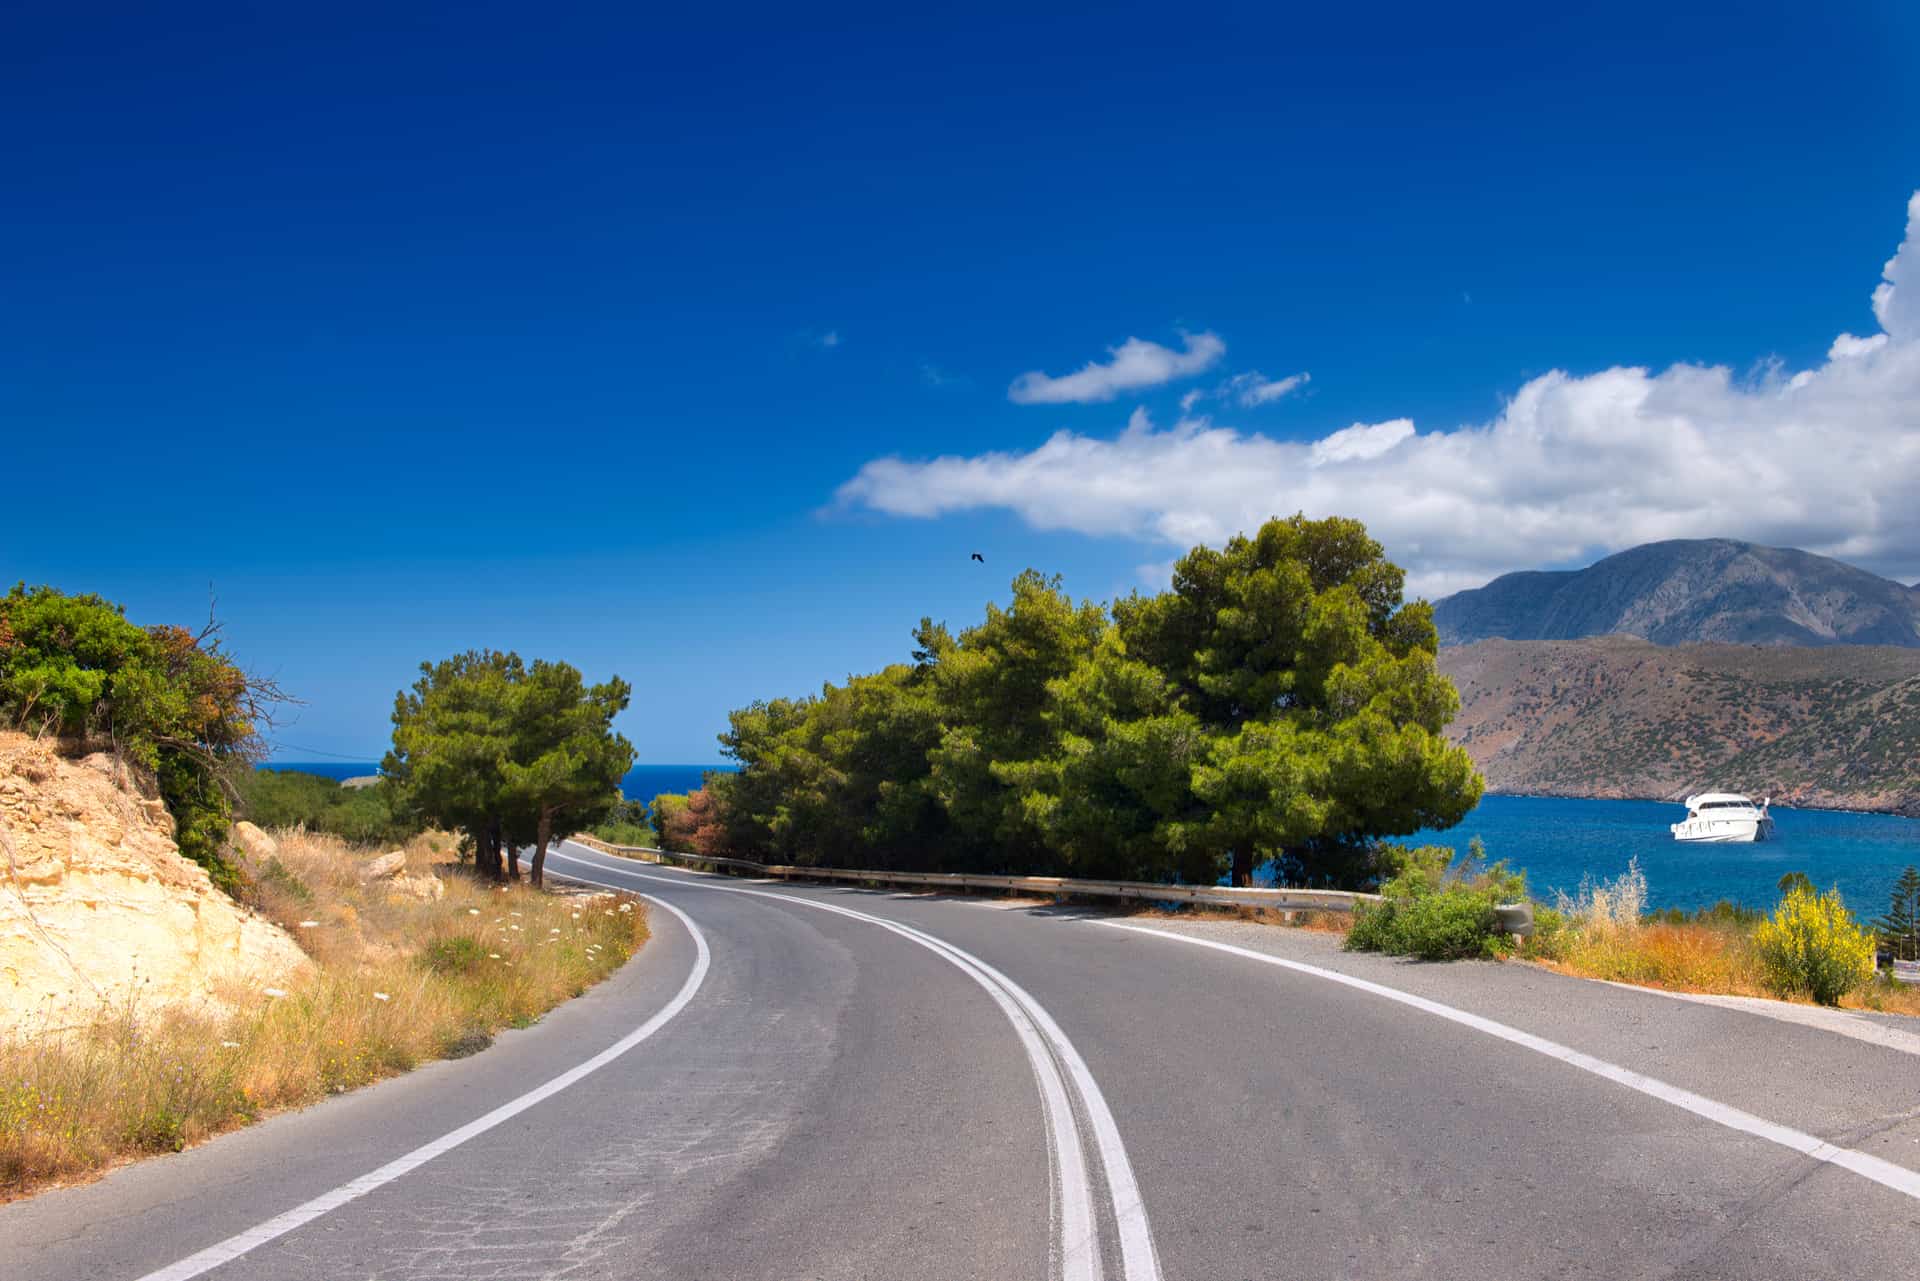 blog road trip grece